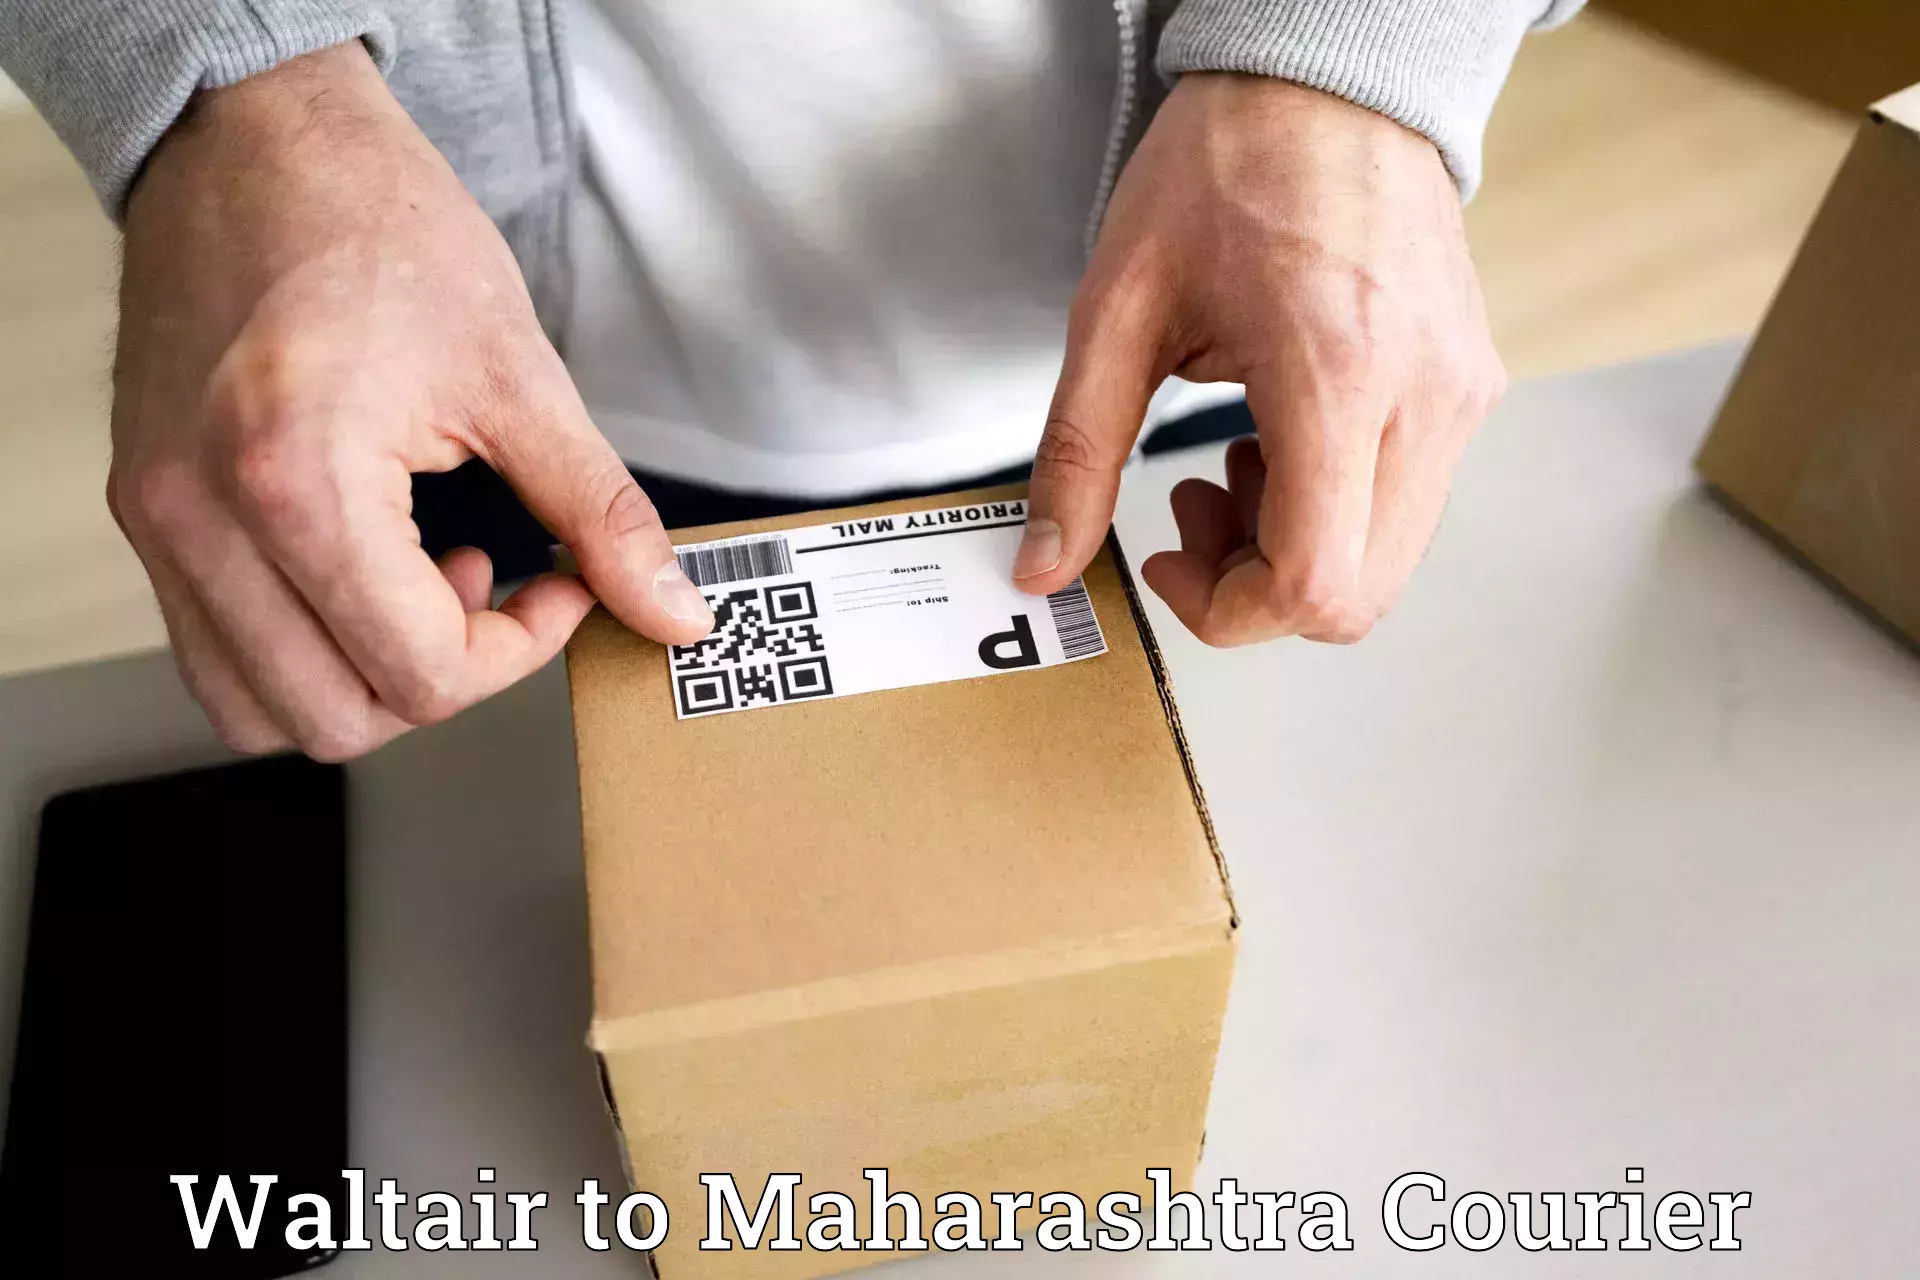 International courier networks Waltair to Vaijapur